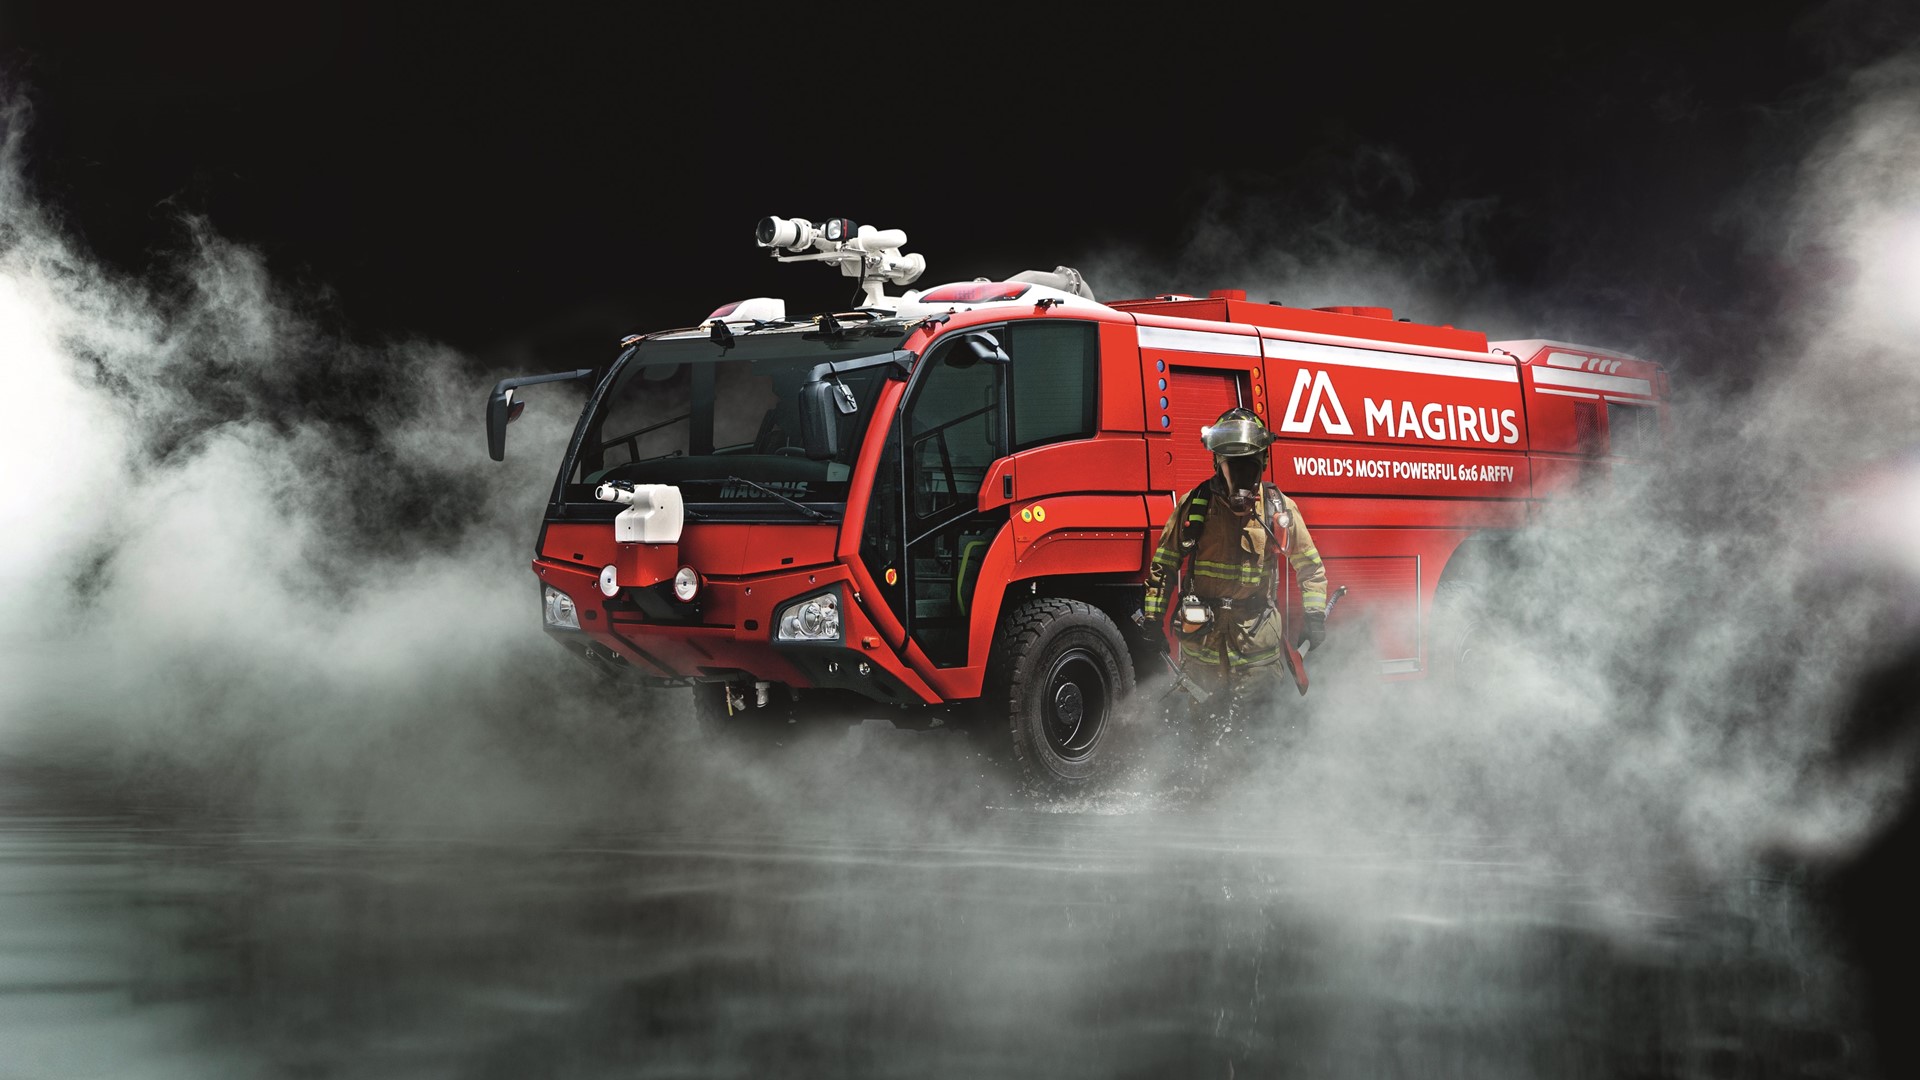 The Magirus Dragon Airport Firefighting Vehicle